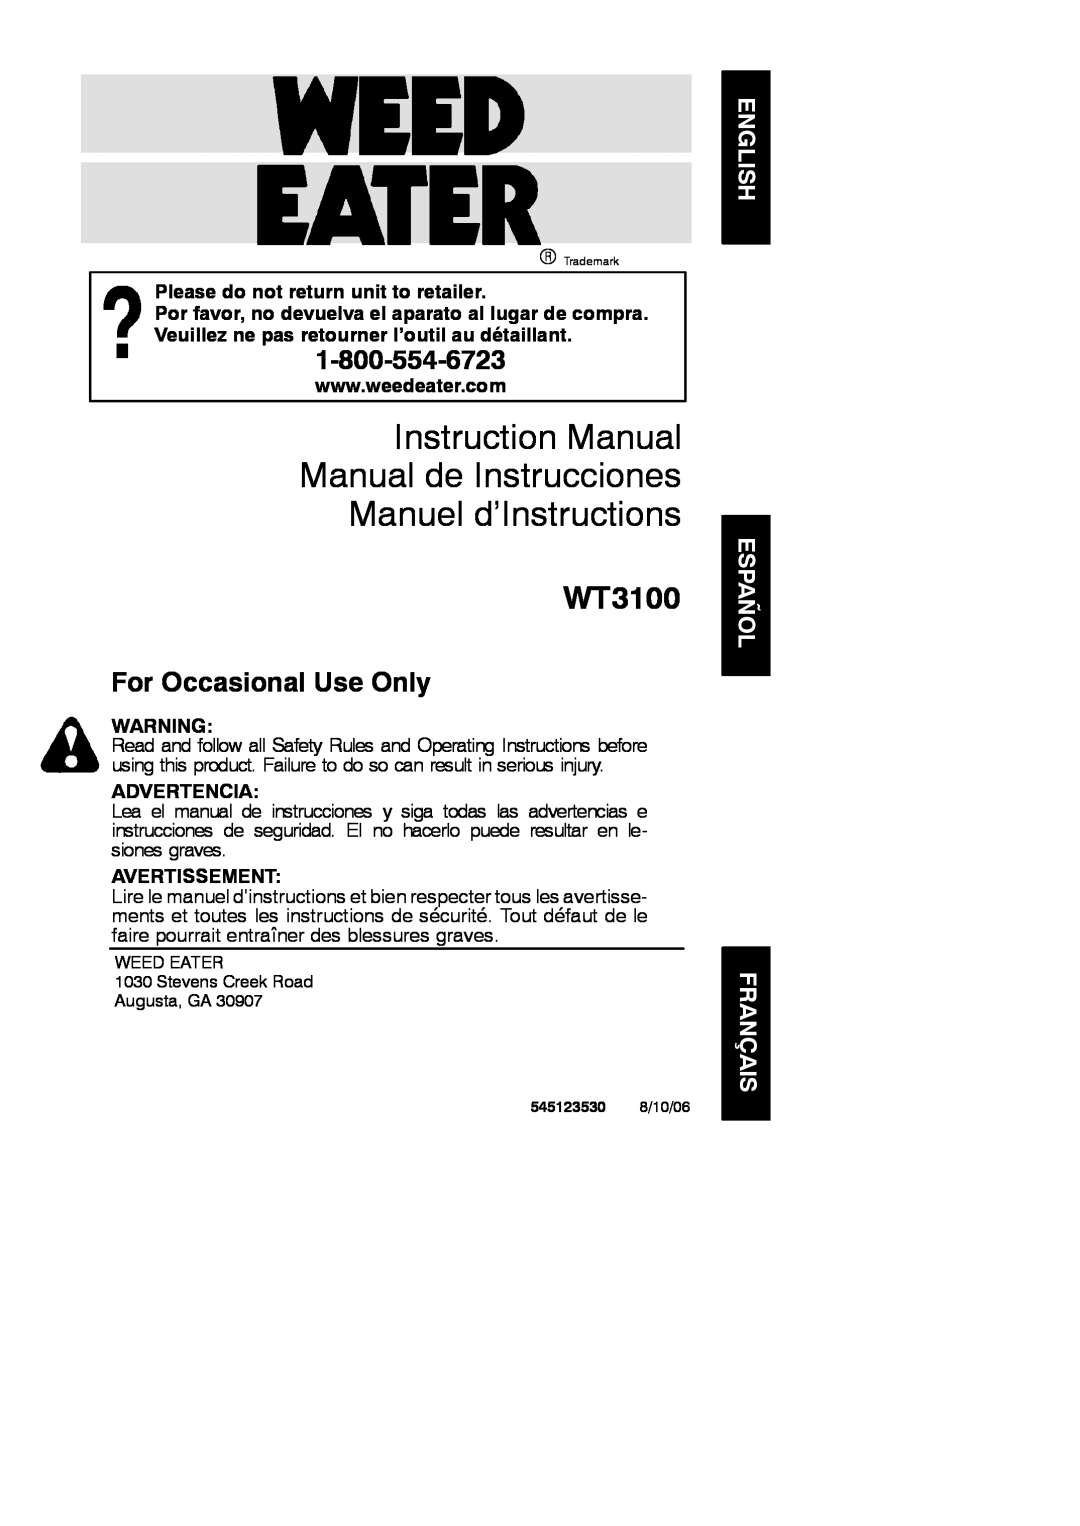 Poulan WT3100 instruction manual English Español Français, Manuel d’Instructions, For Occasional Use Only, Advertencia 